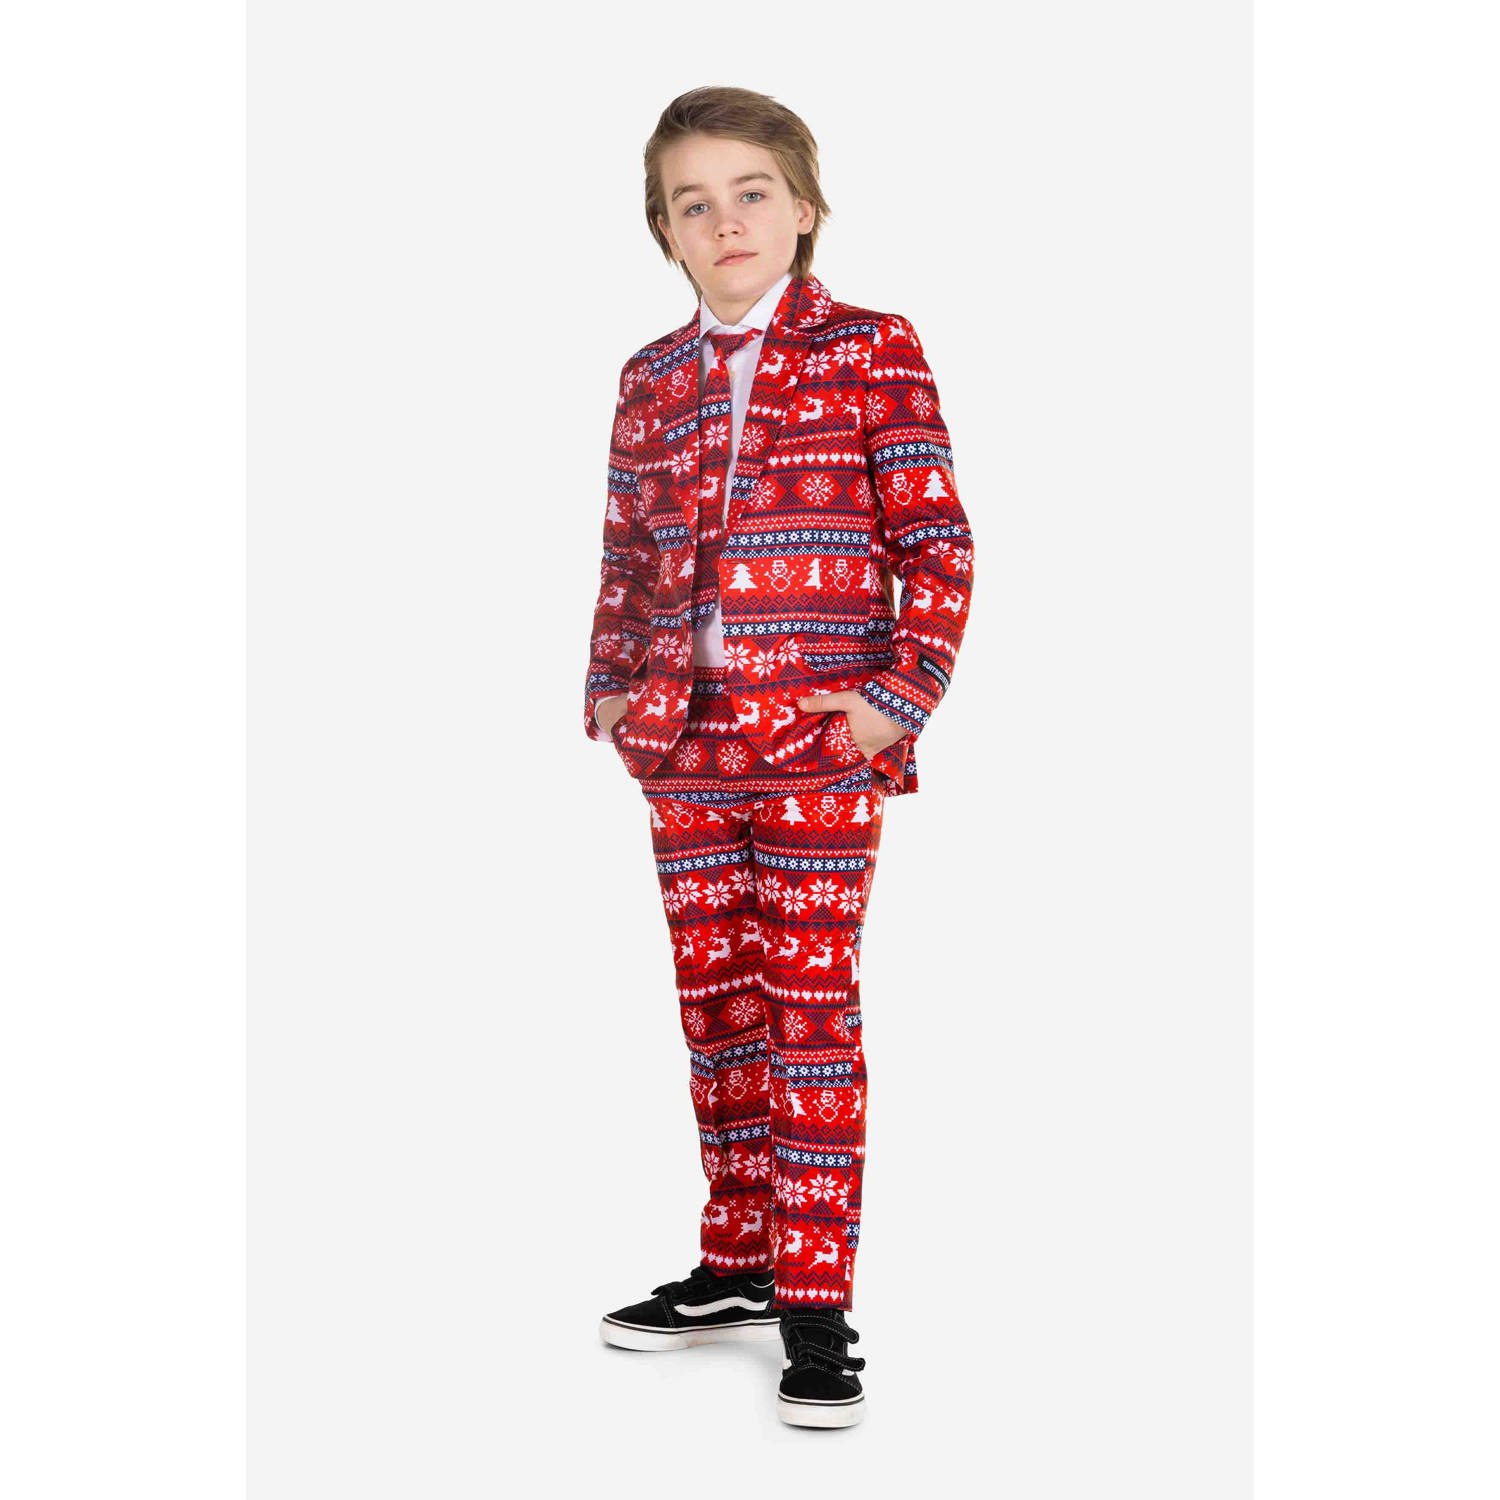 Suitmeister kostuum Nordic Pixel Red met all over print rood multicolor